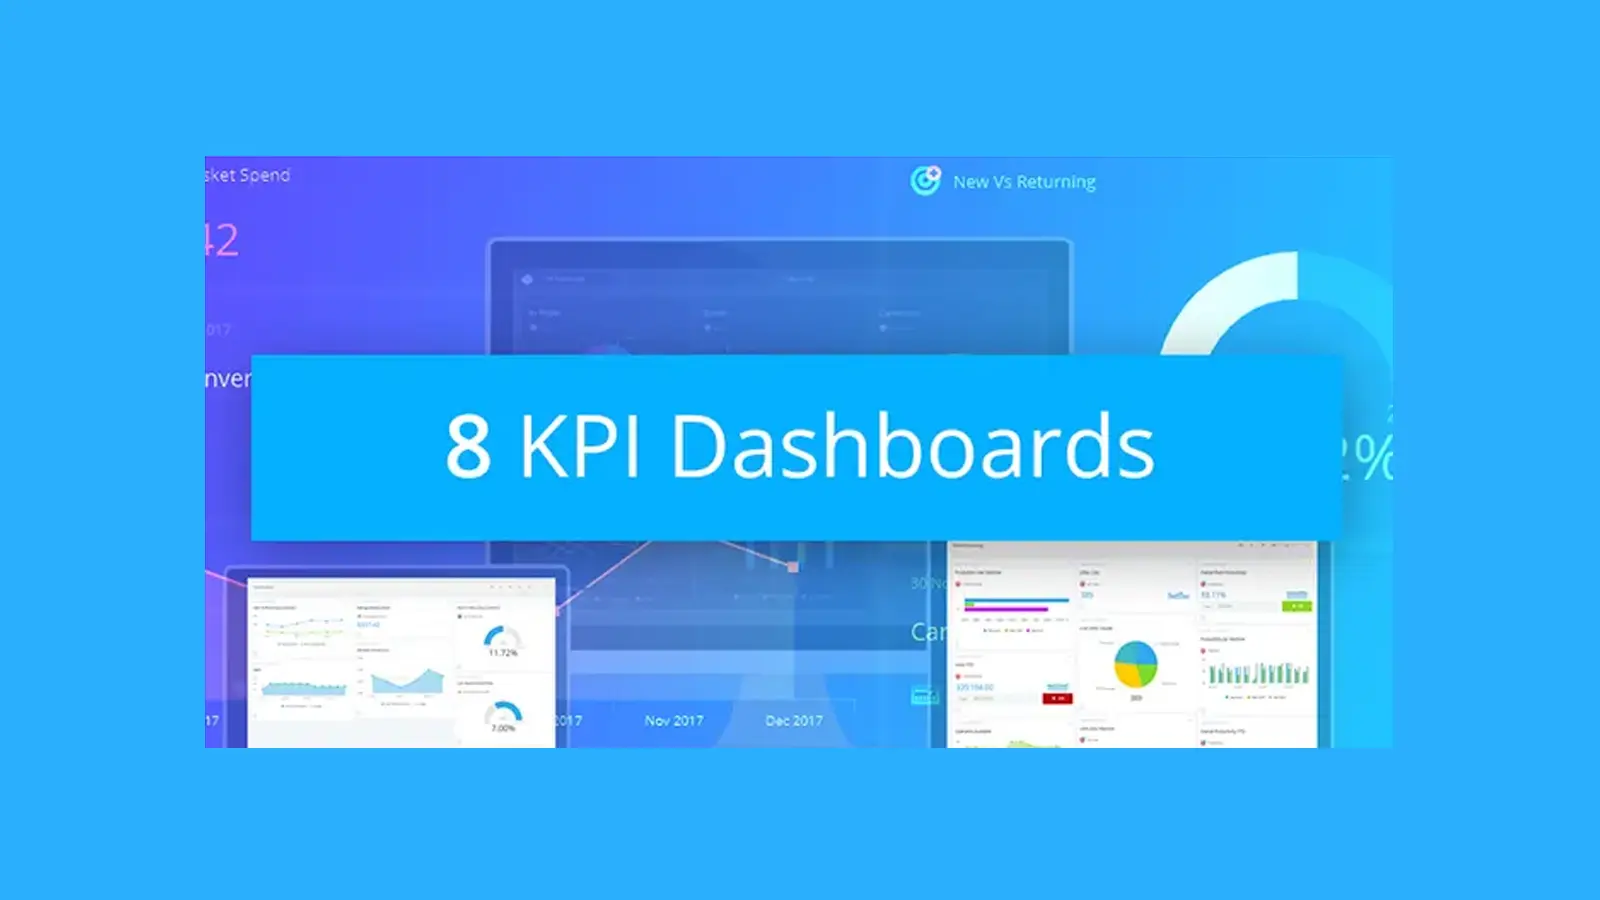 8 KPI Dashboards Headline across 8 different dashboard screens